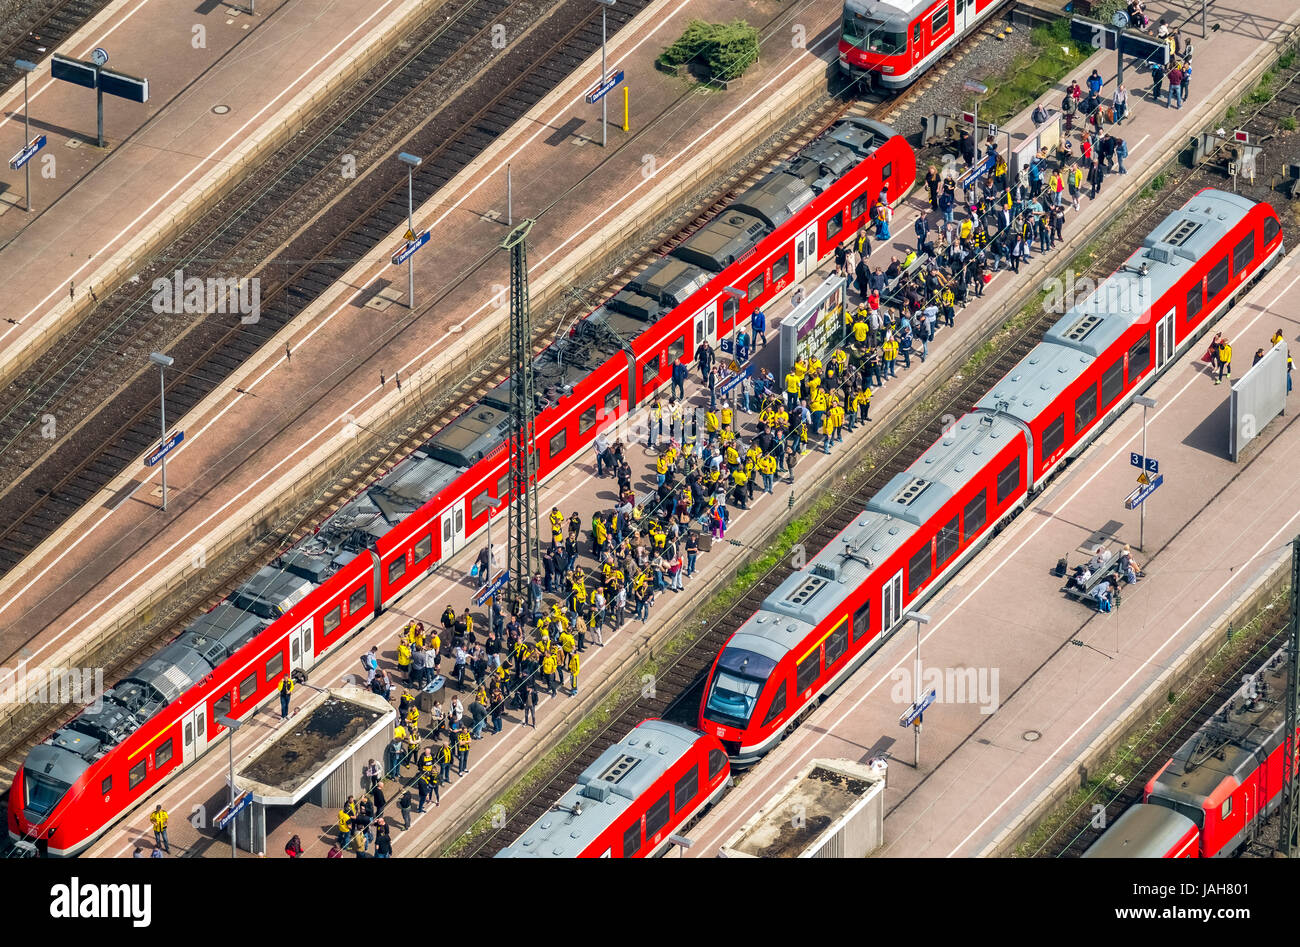 Urban railway, platform with BVB fans, Dortmund, Ruhr area, North Rhine-Westphalia, Germany Stock Photo